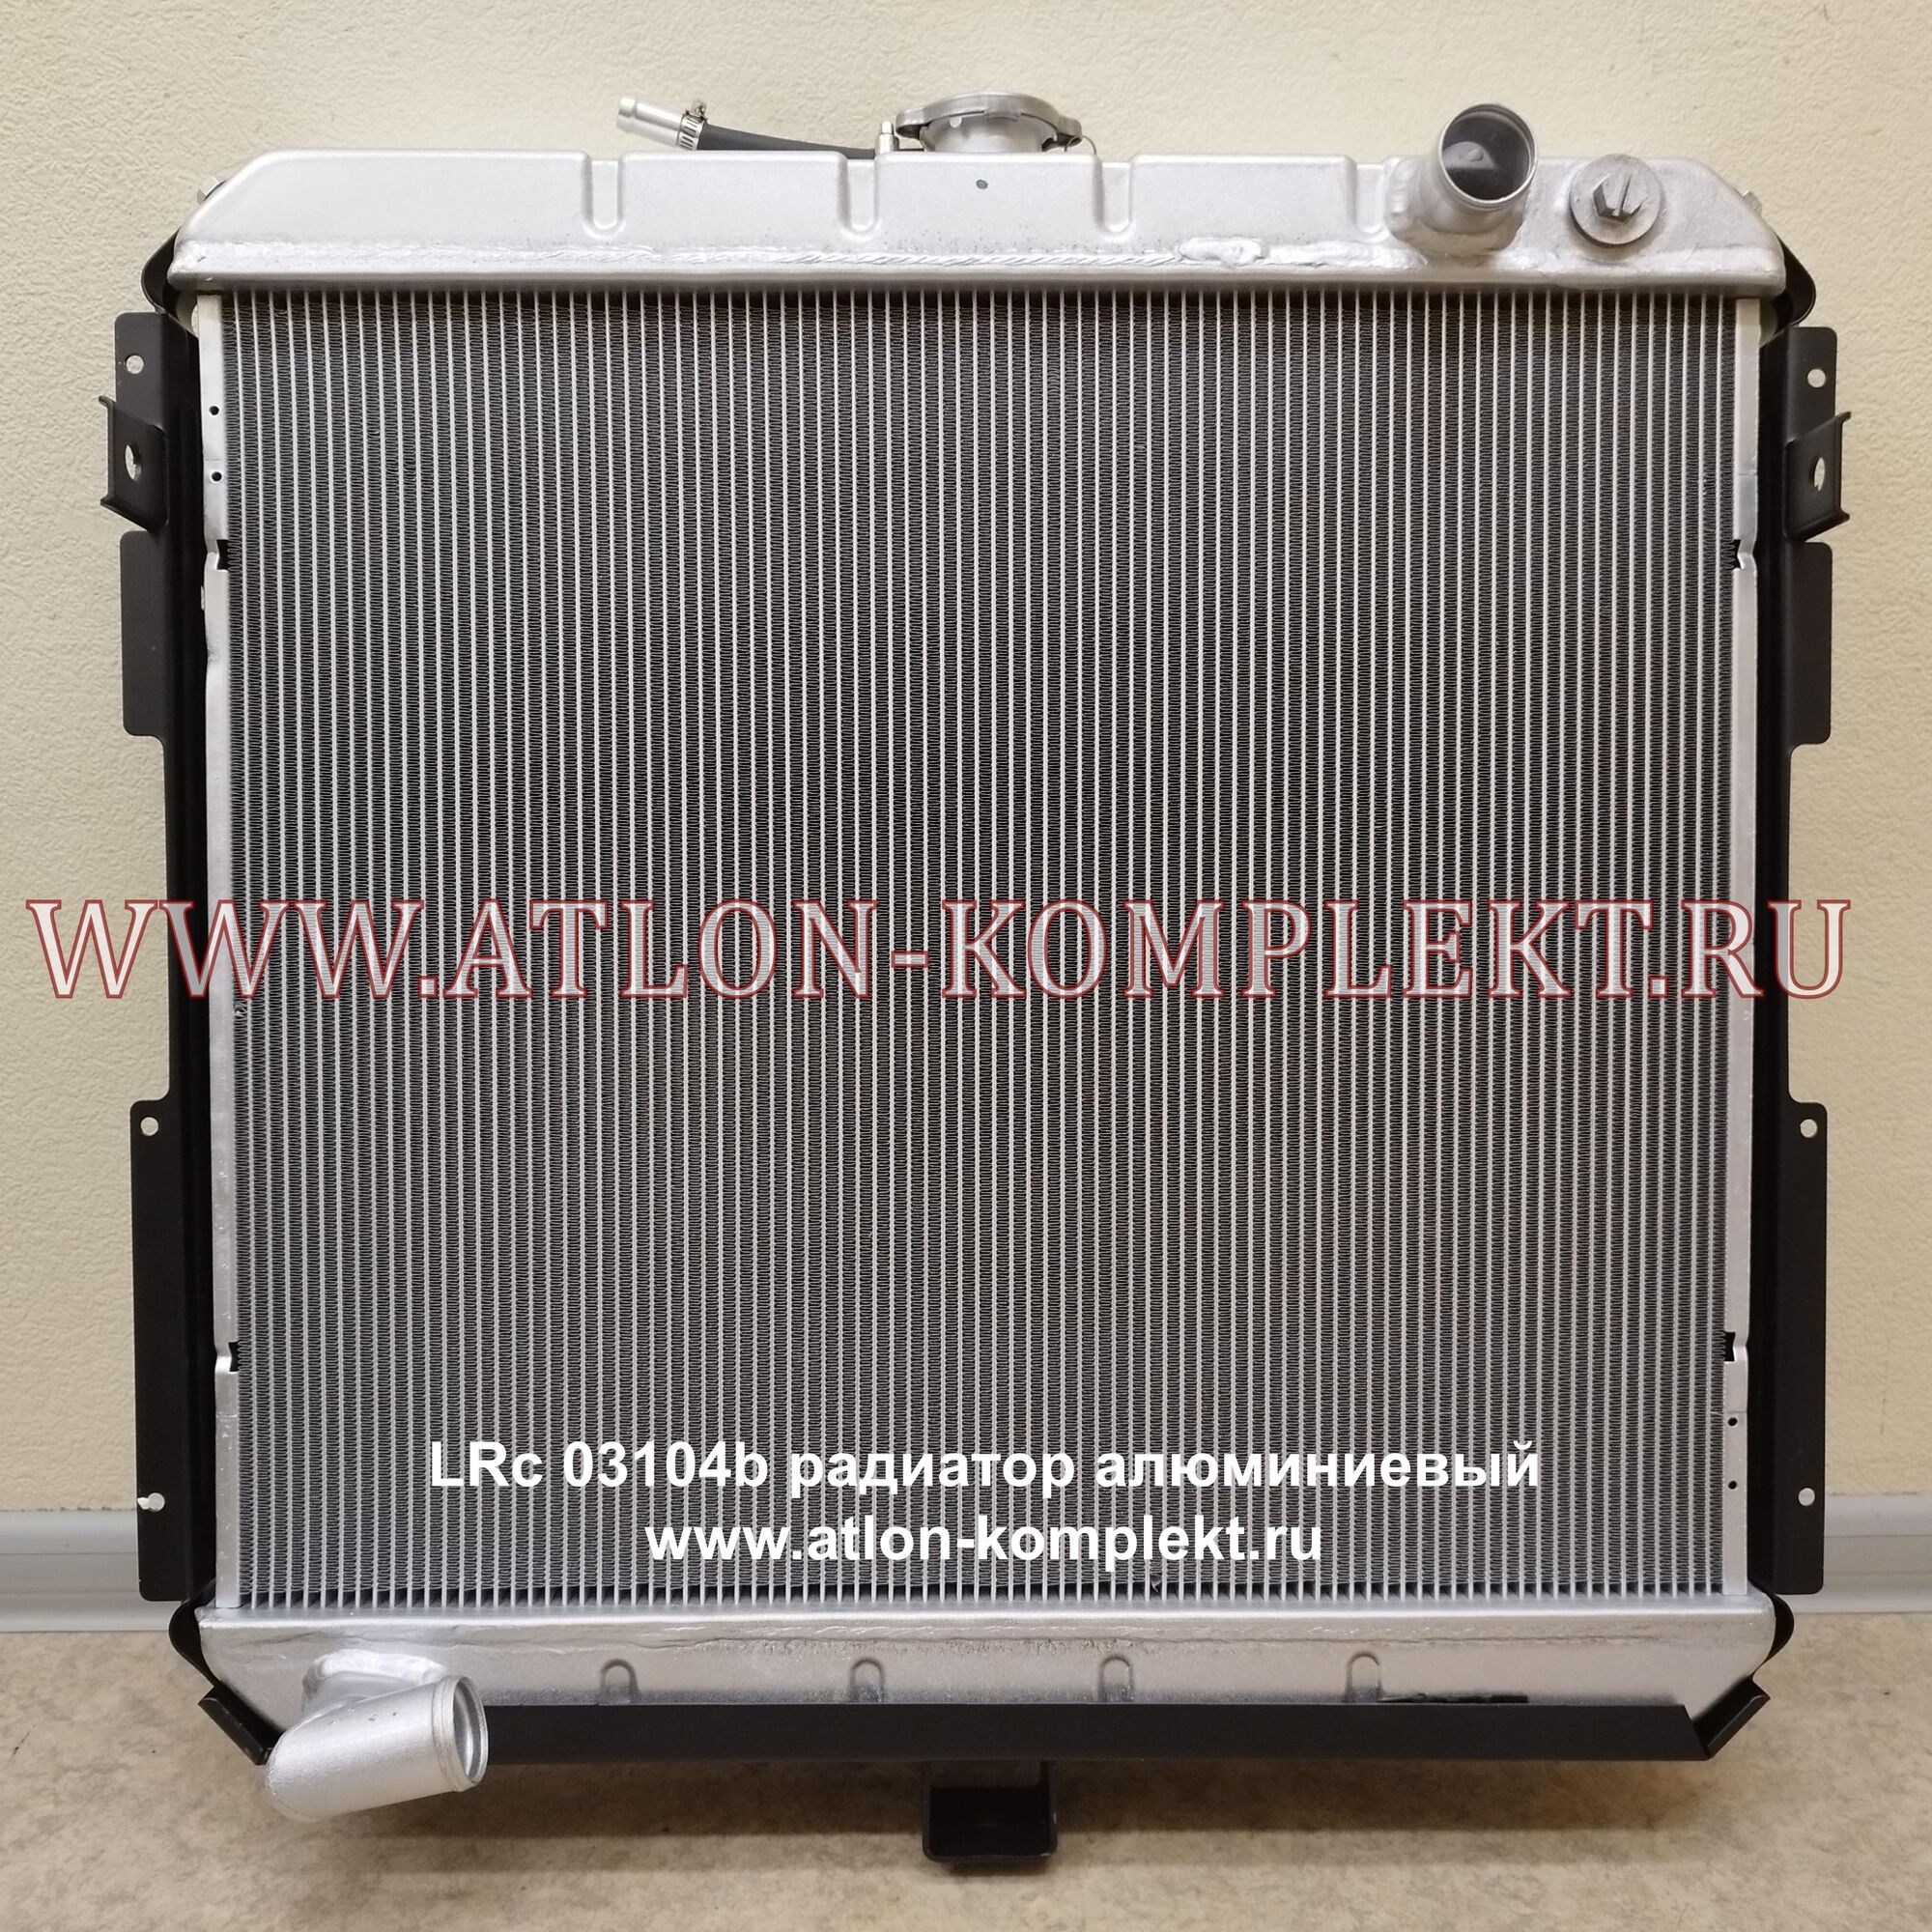 Радиатор ВАЛДАЙ Д-245 ГАЗ-33104, САЗ-2505, САЗ-3414 алюминиевый LRc 03104b (33104-1301010)